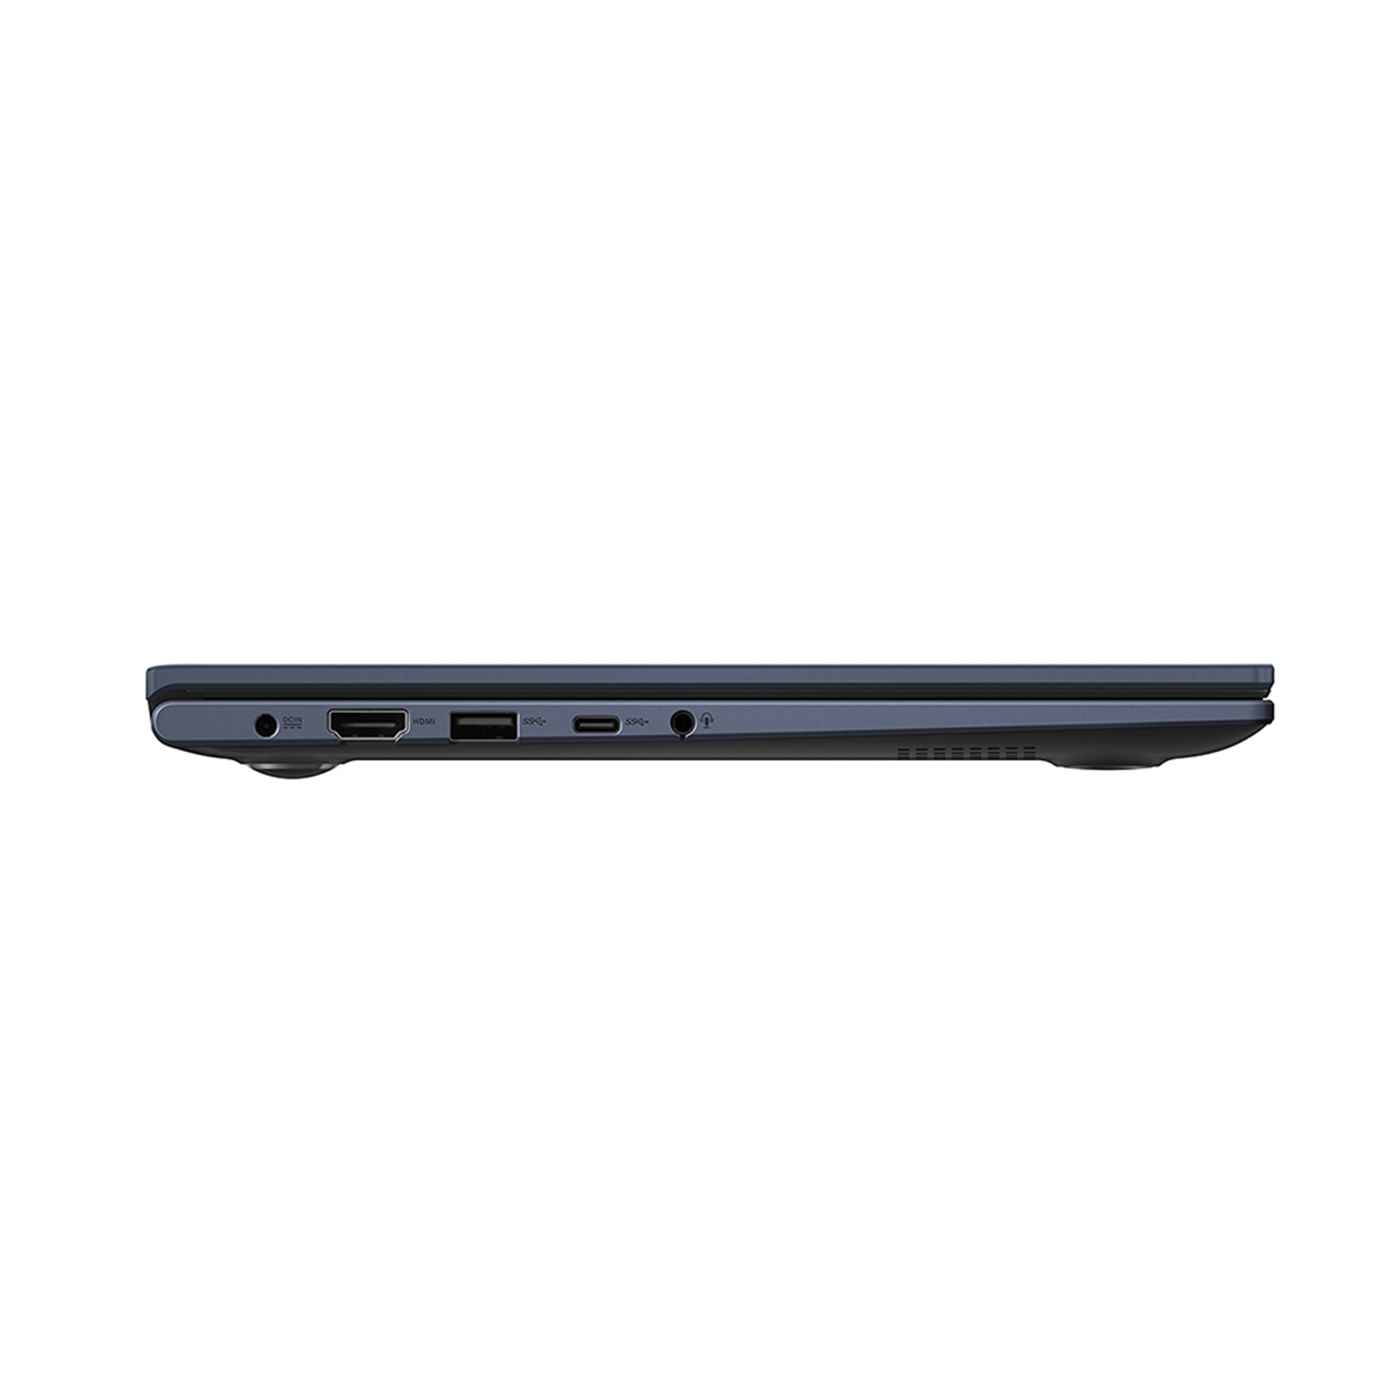 Computador Portátil ASUS VivoBook 14" Pulgadas M413DA AMD Ryzen 7 - RAM 8GB - Disco SSD 512 GB - Negro + Obsequios